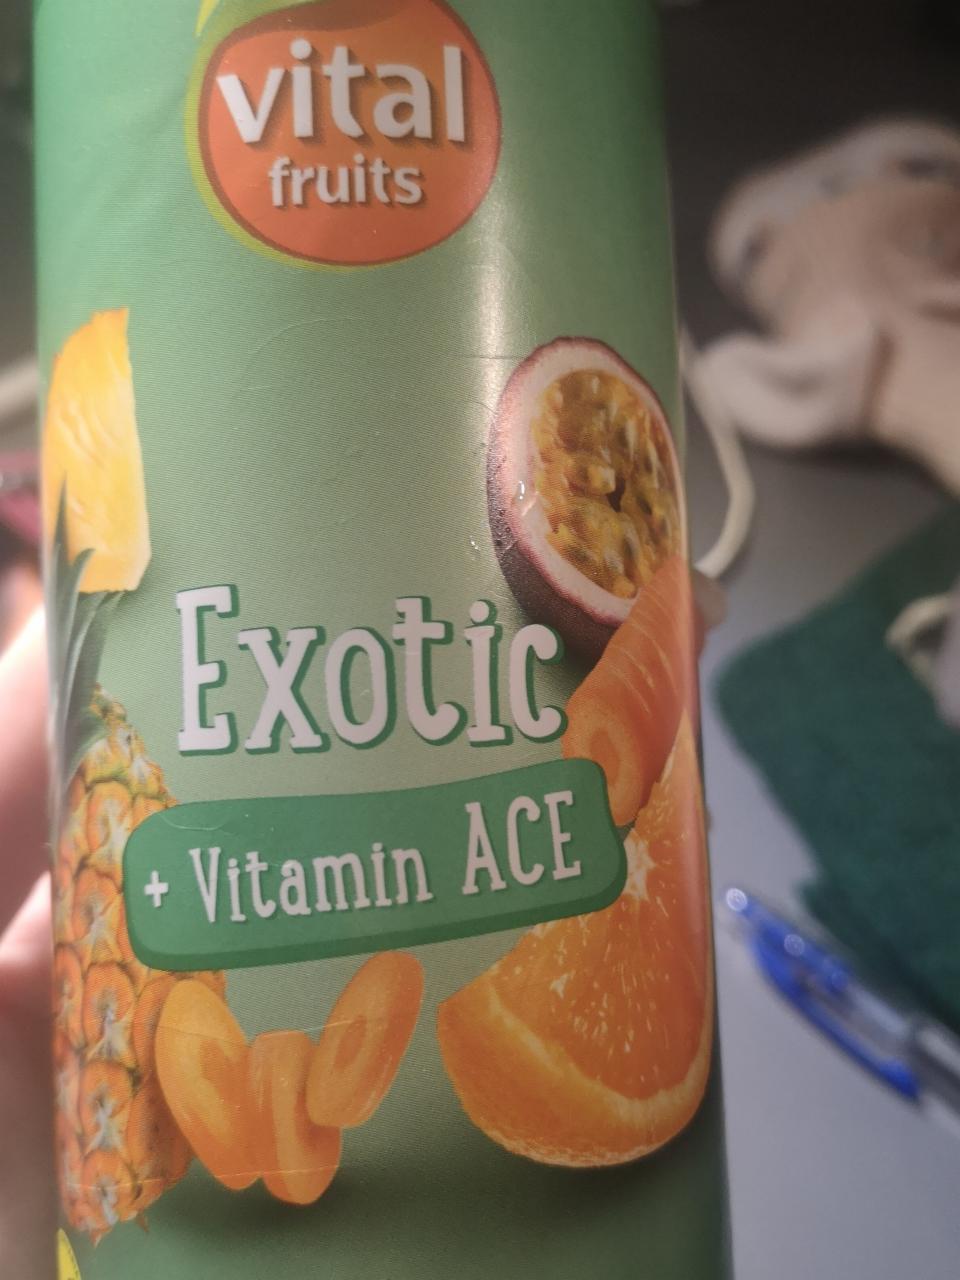 Képek - Exotic + vitamin ACE Vital fruits